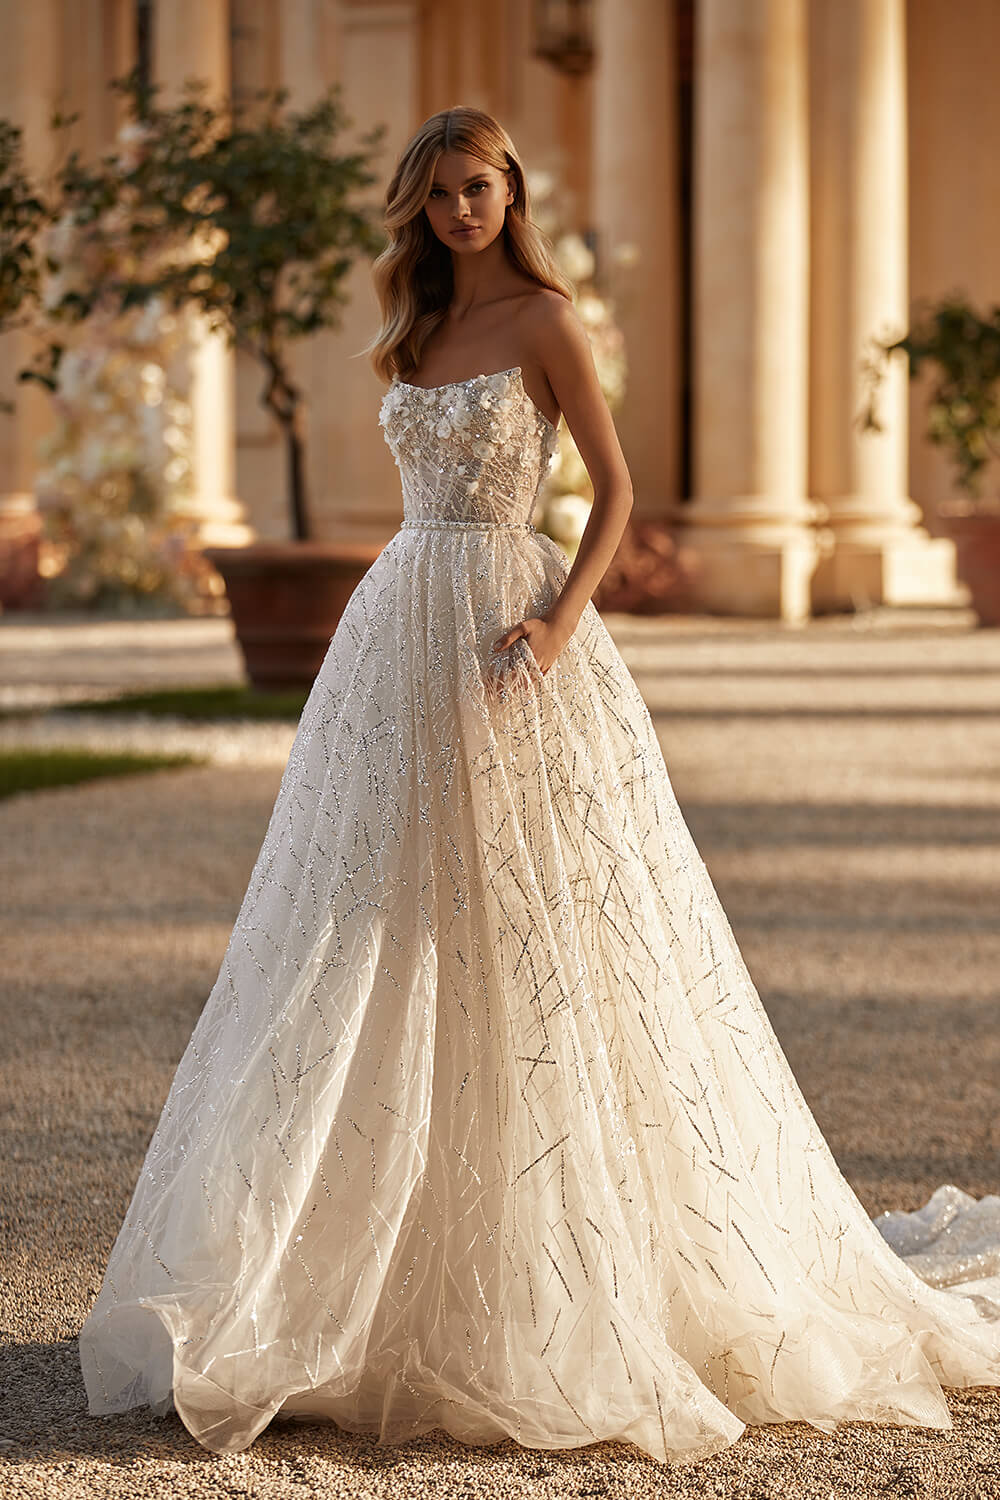 silver wedding gown